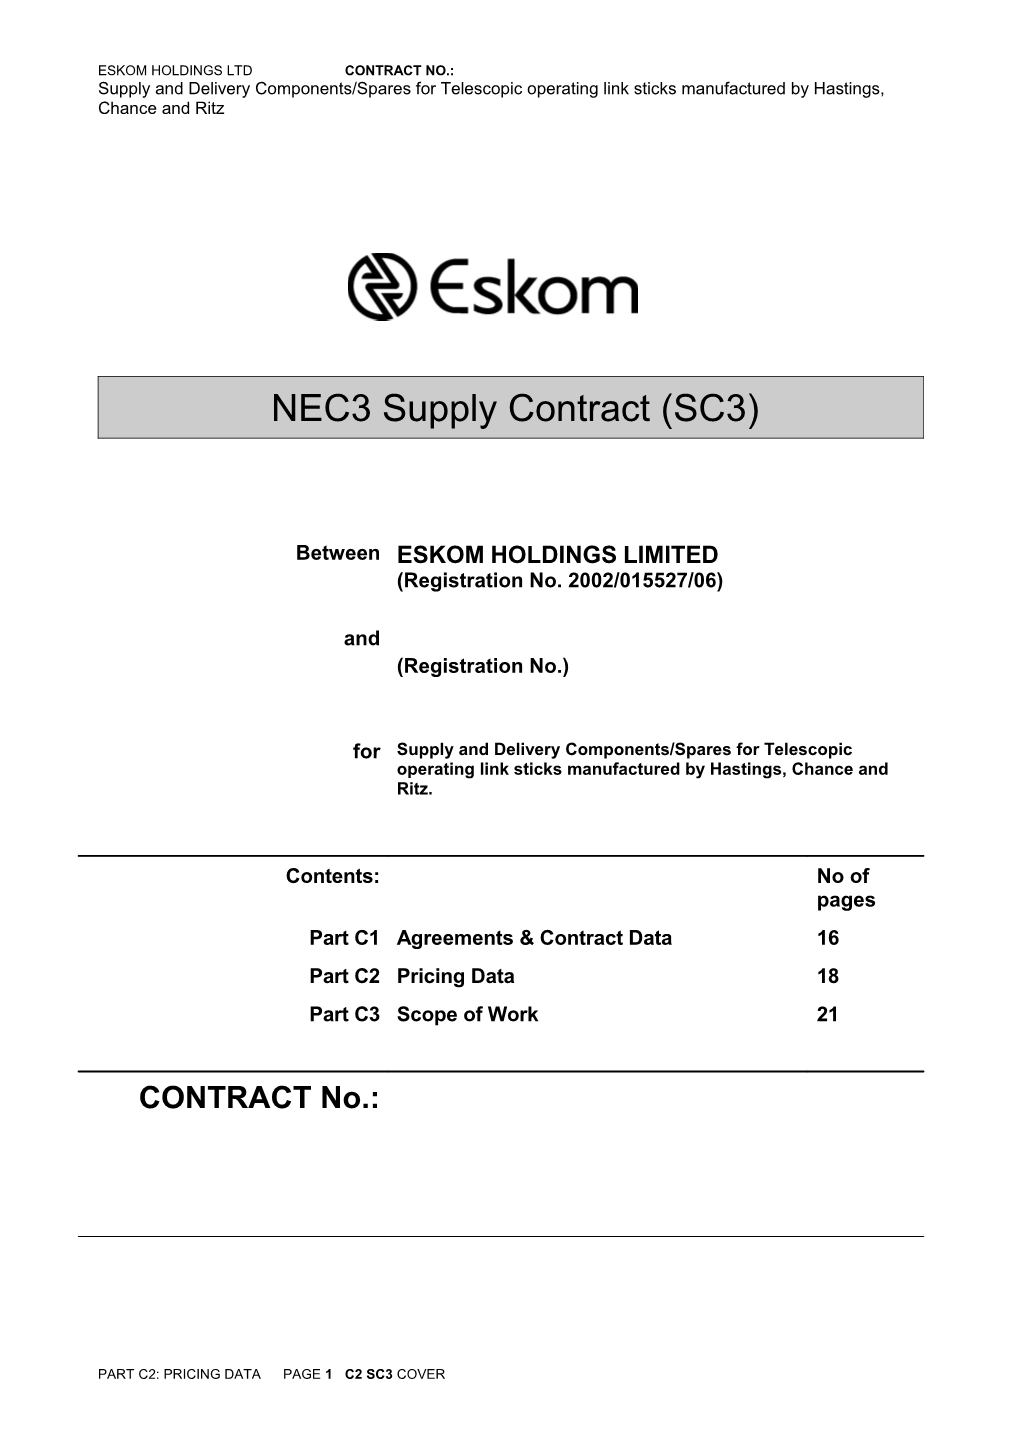 Eskom Holdings Ltd Contract No